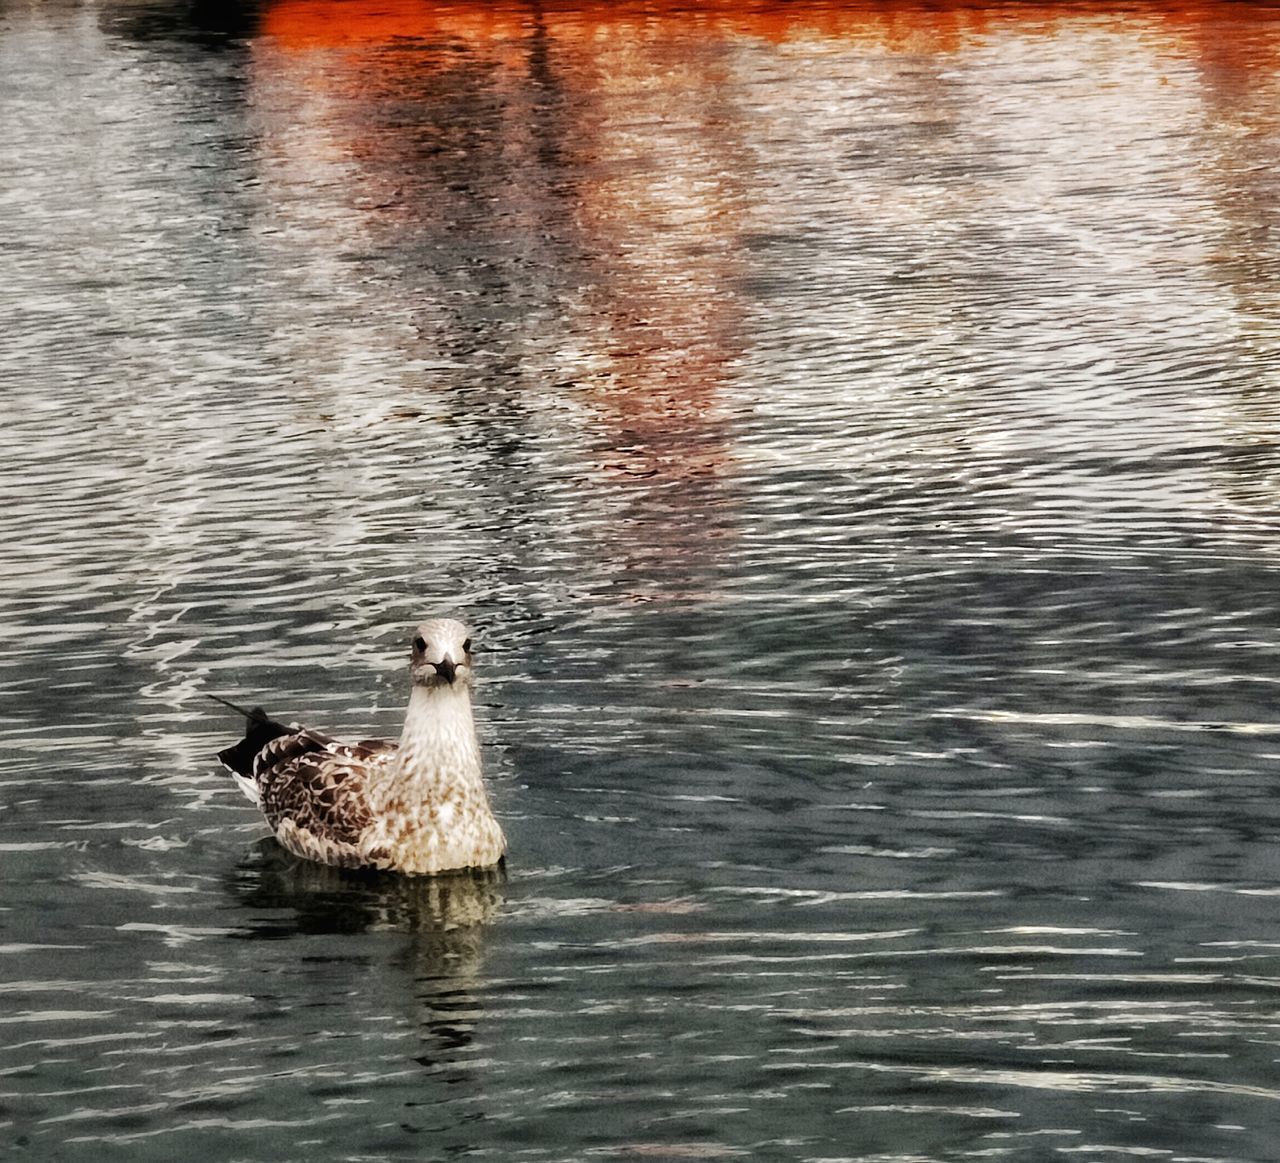 BIRD SWIMMING IN LAKE